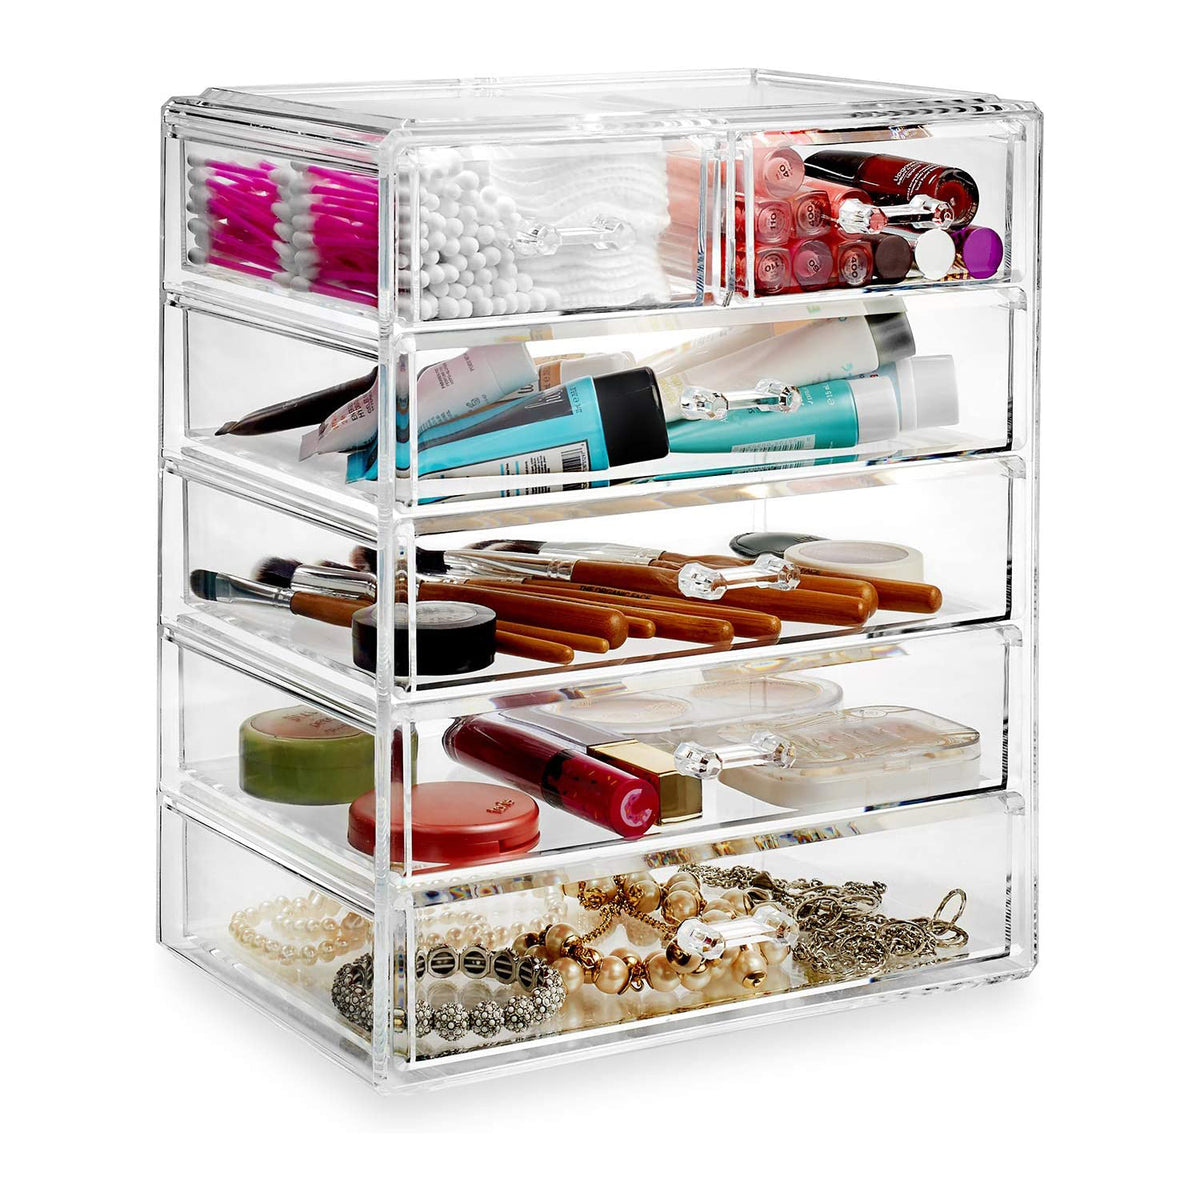 Acrylic Makeup Organizer and Storage  with 6 Drawers - Vanity Organizers and Storage